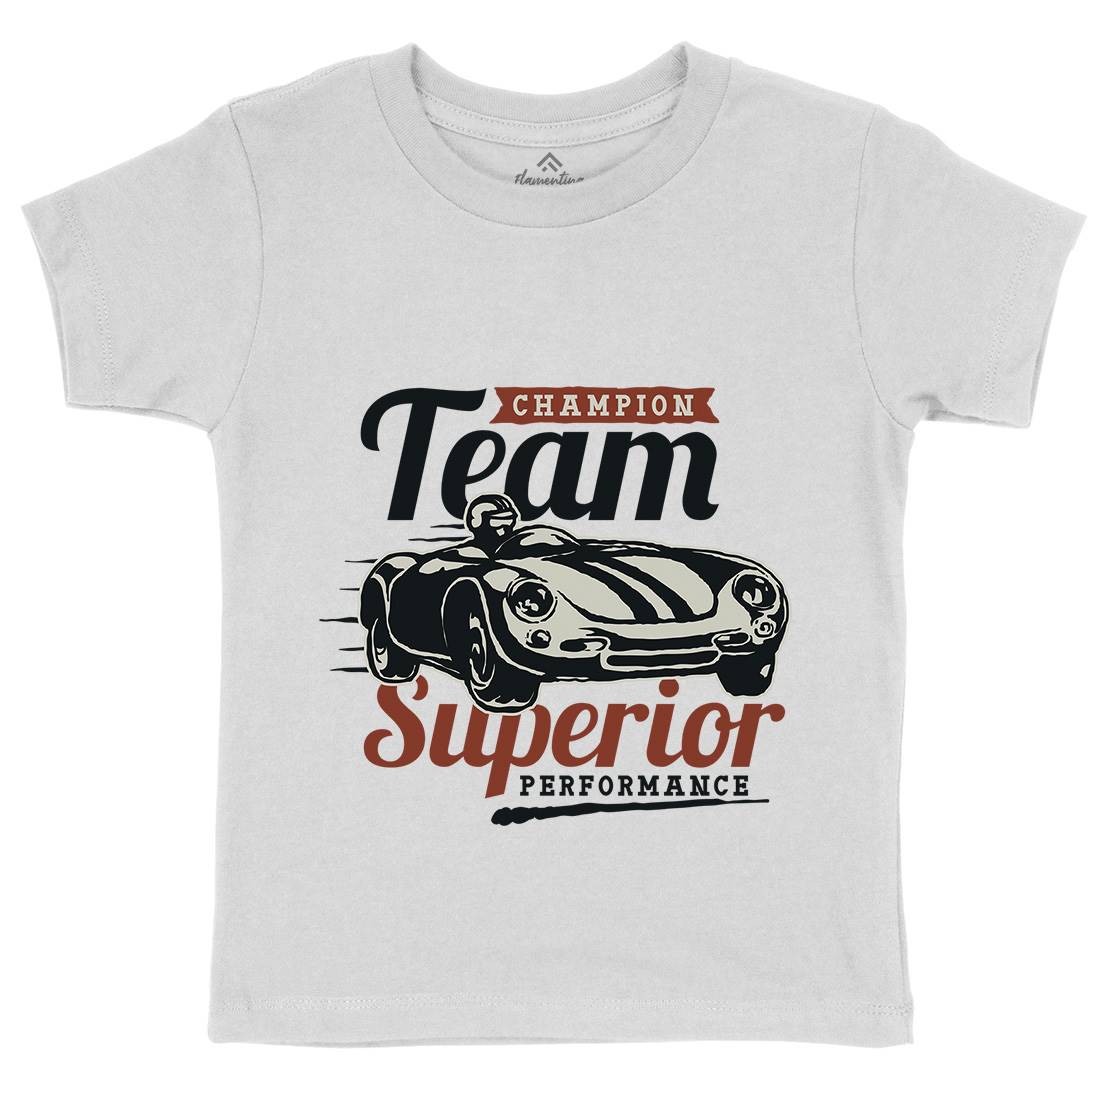 Vintage Racer Champion Kids Crew Neck T-Shirt Cars A492